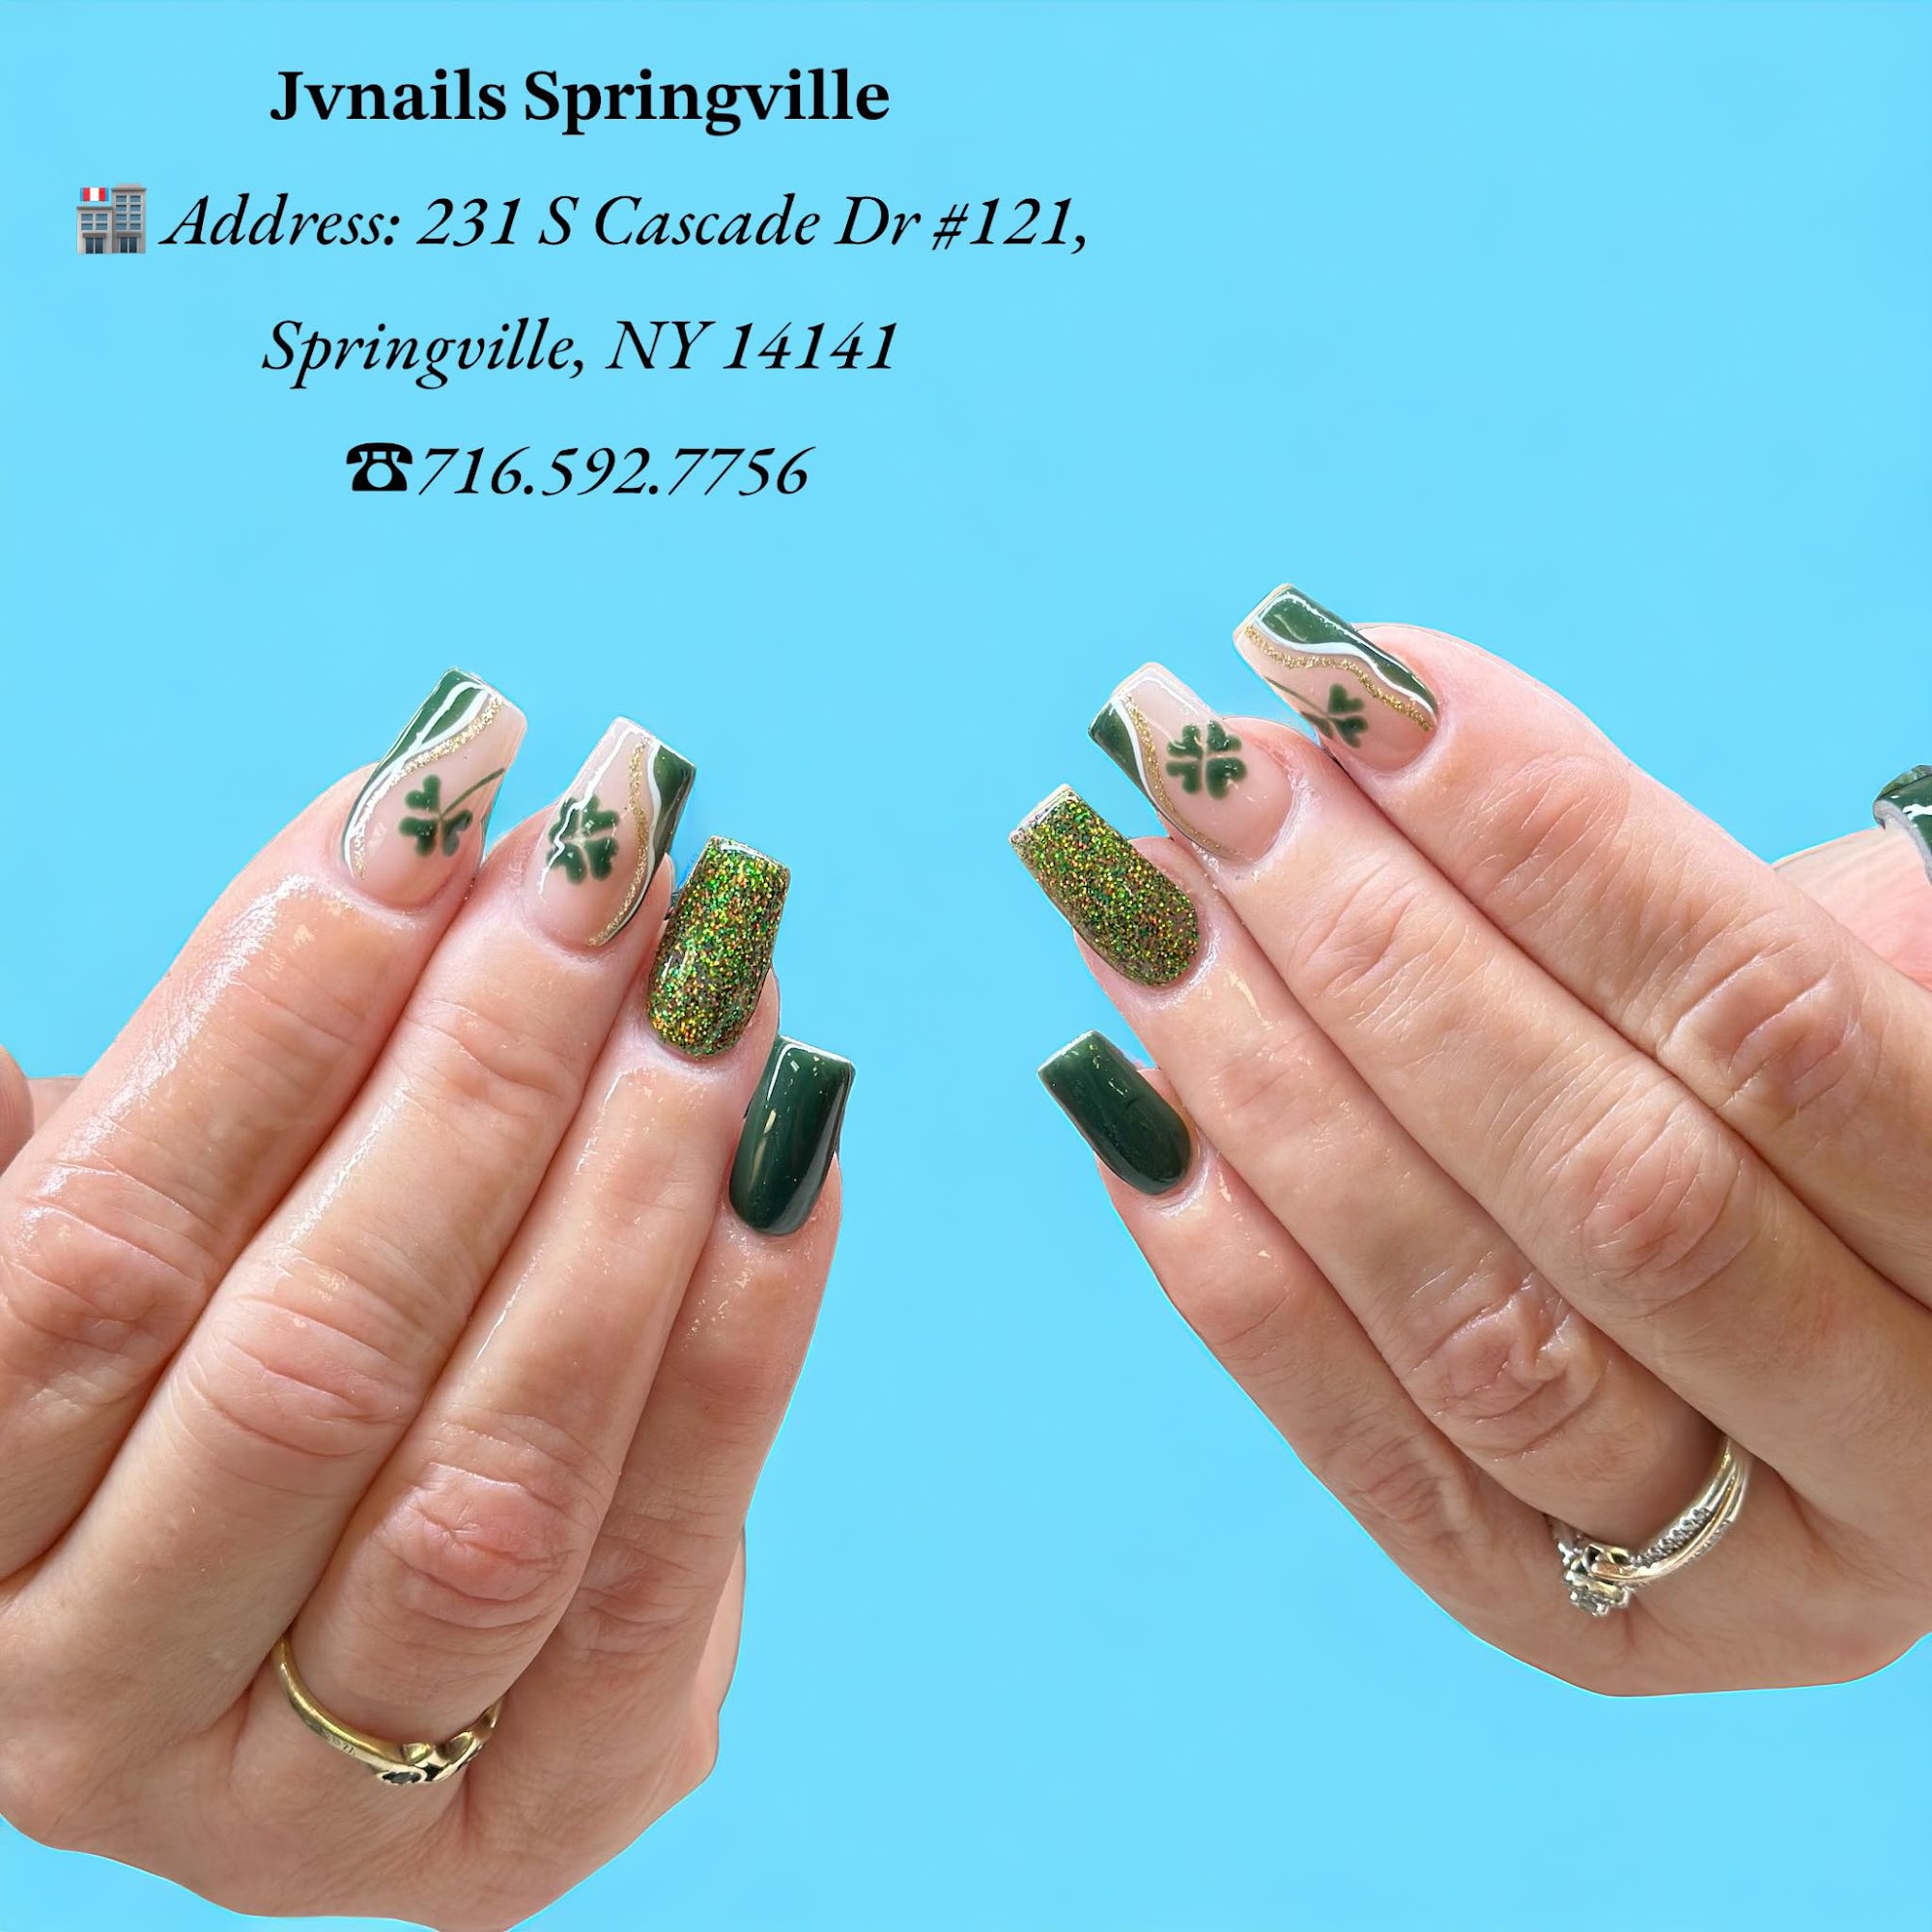 J V Nails Springville 231 S Cascade Dr # 138, Springville New York 14141